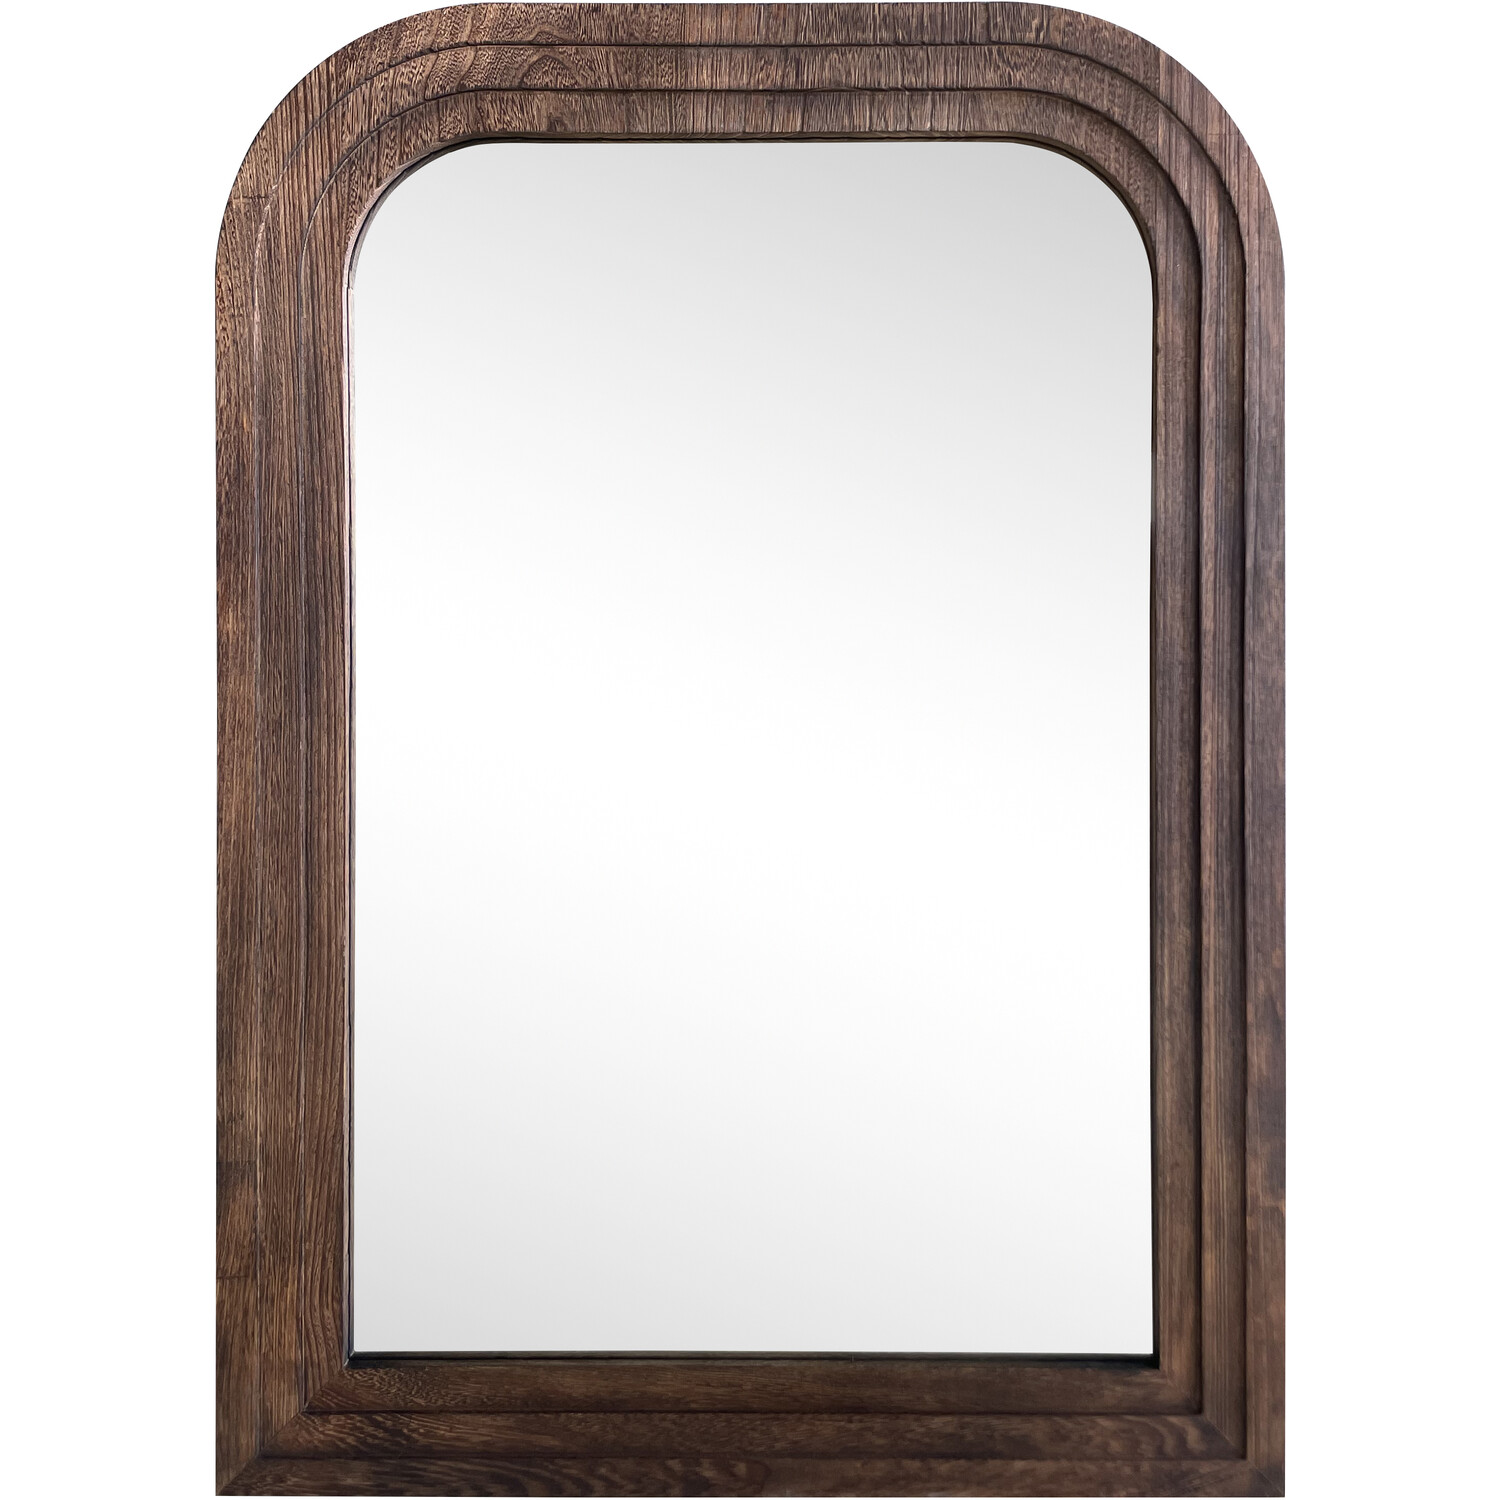 Harper Brown Wooden Arch Wall Mirror Image 1